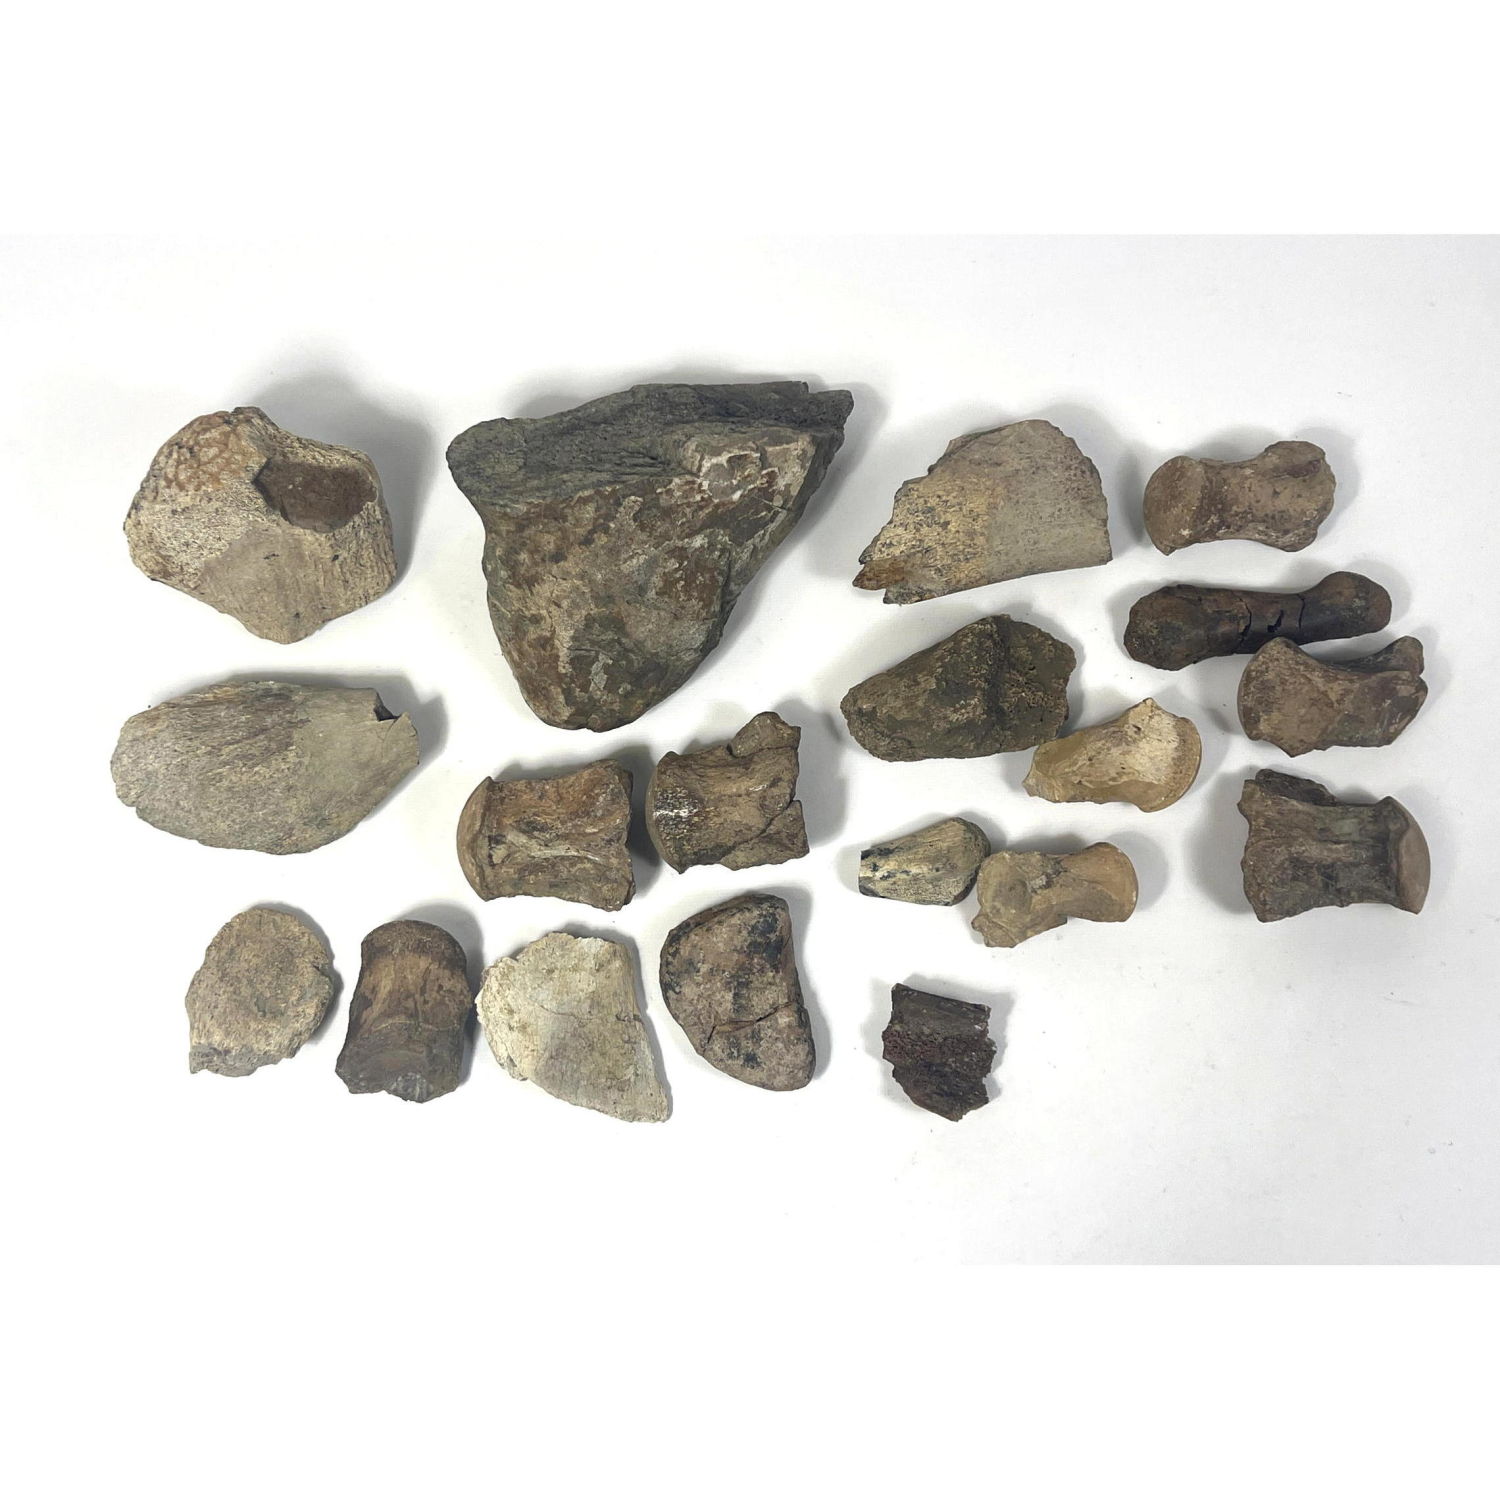 Rocks Lot. Fossilized bone. 

Dimensions: